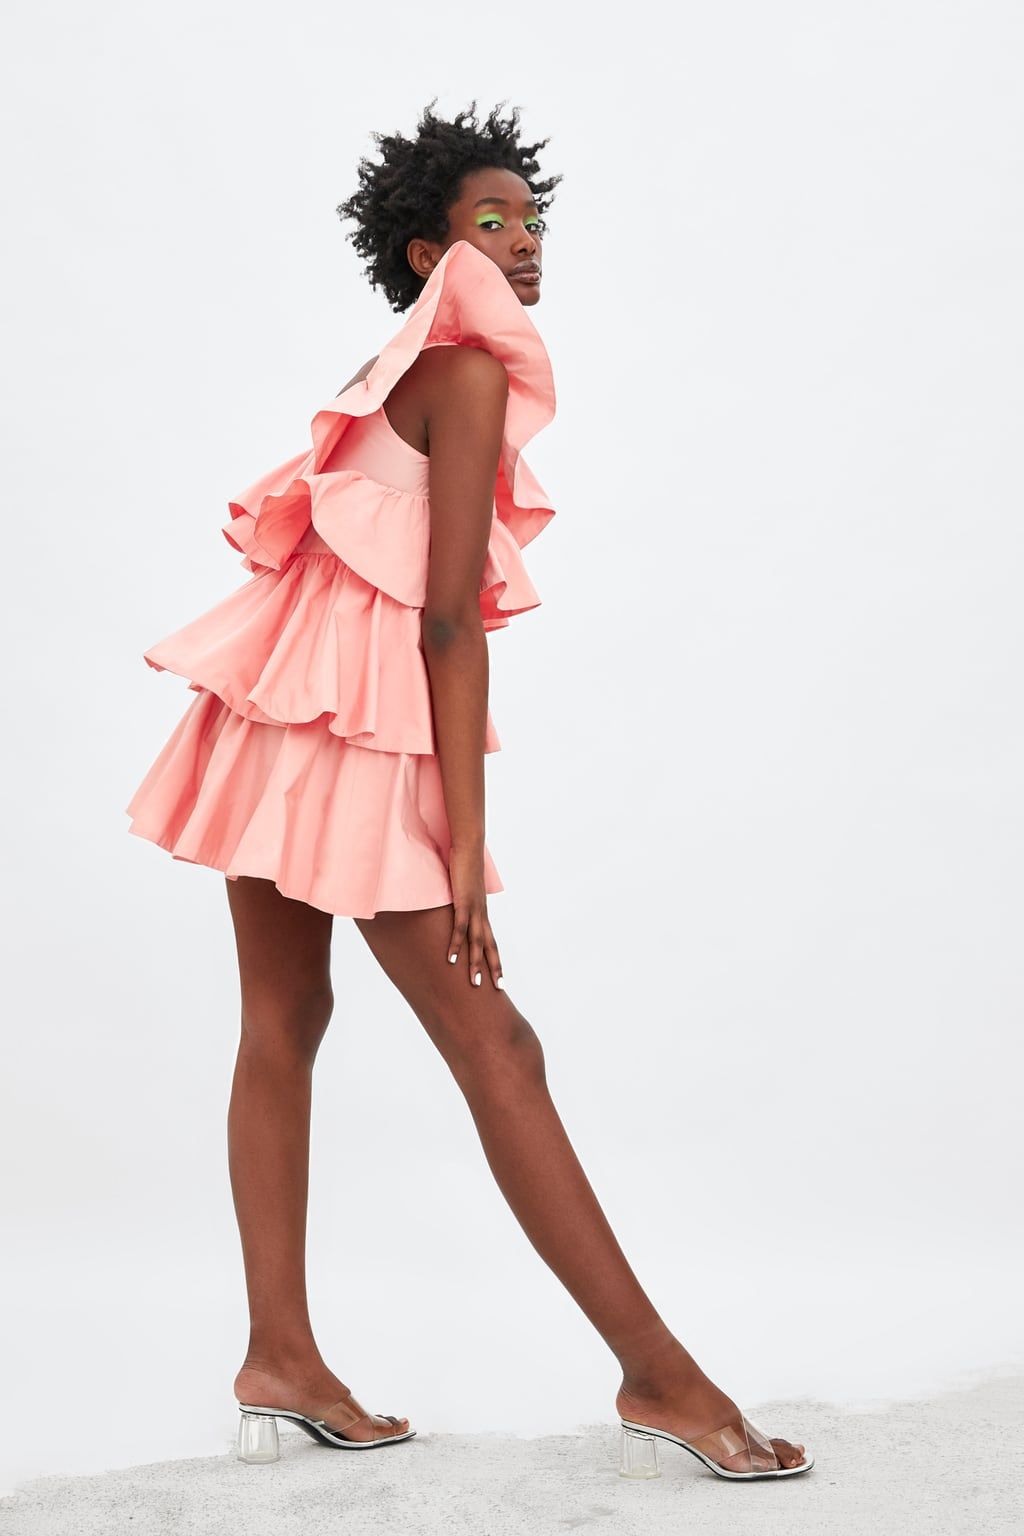 Zara ha lanzado dos vestidos perfectos amantes del rosa son tan espectaculares que se están